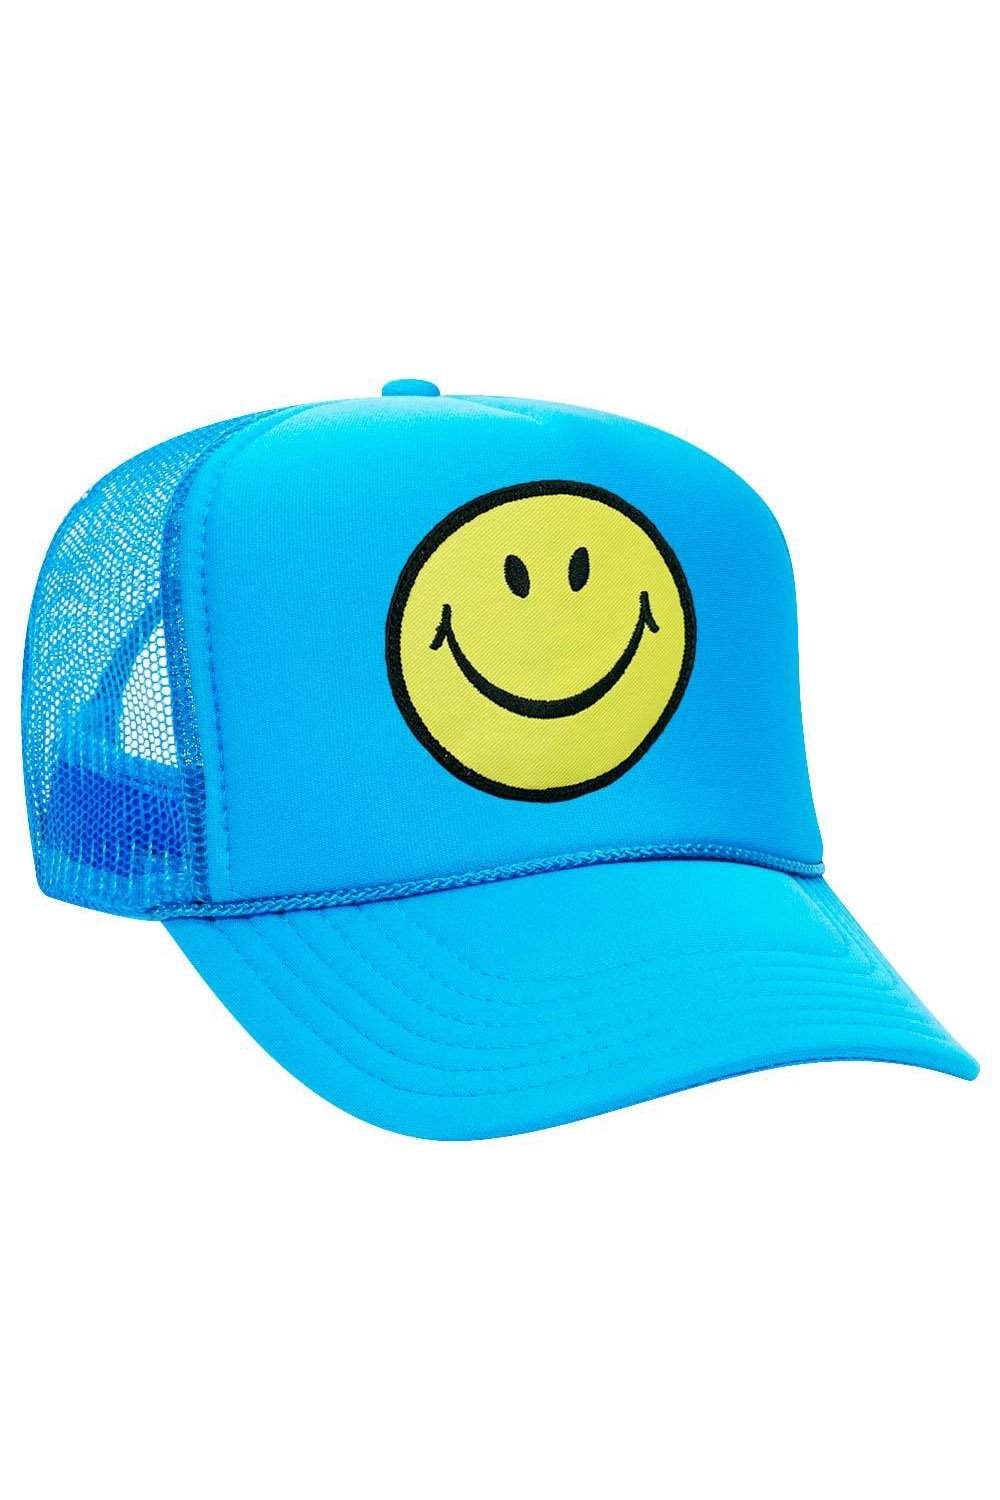 SMILEY VINTAGE TRUCKER HAT HATS Aviator Nation OS NEON BLUE 